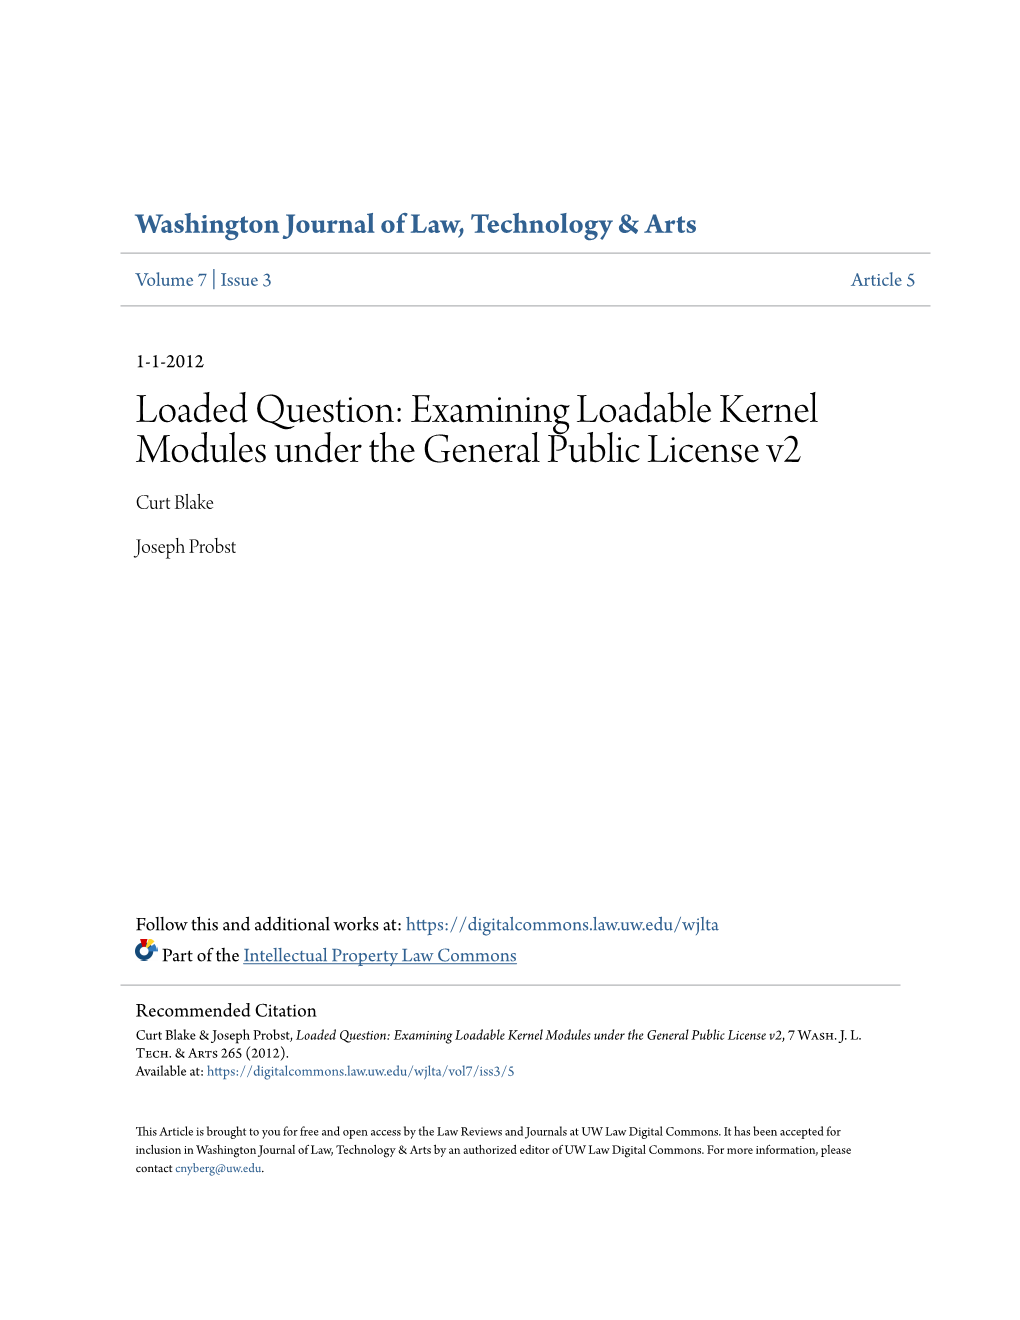 Examining Loadable Kernel Modules Under the General Public License V2 Curt Blake